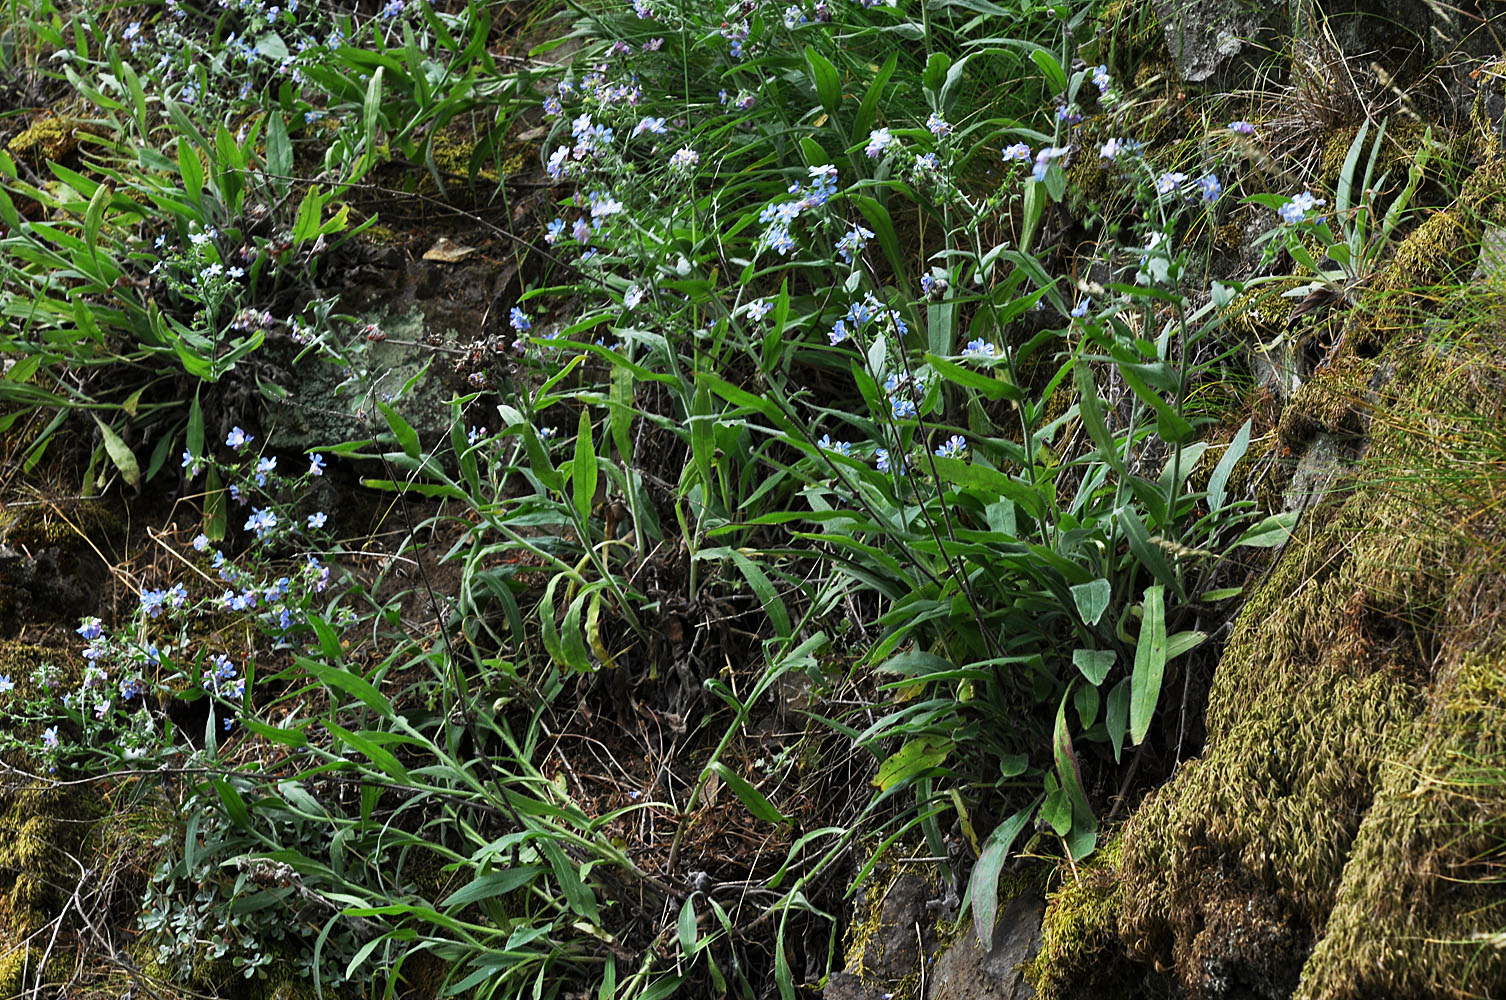 Flora of Eastern Washington Image: Hackelia diffusa diffusa